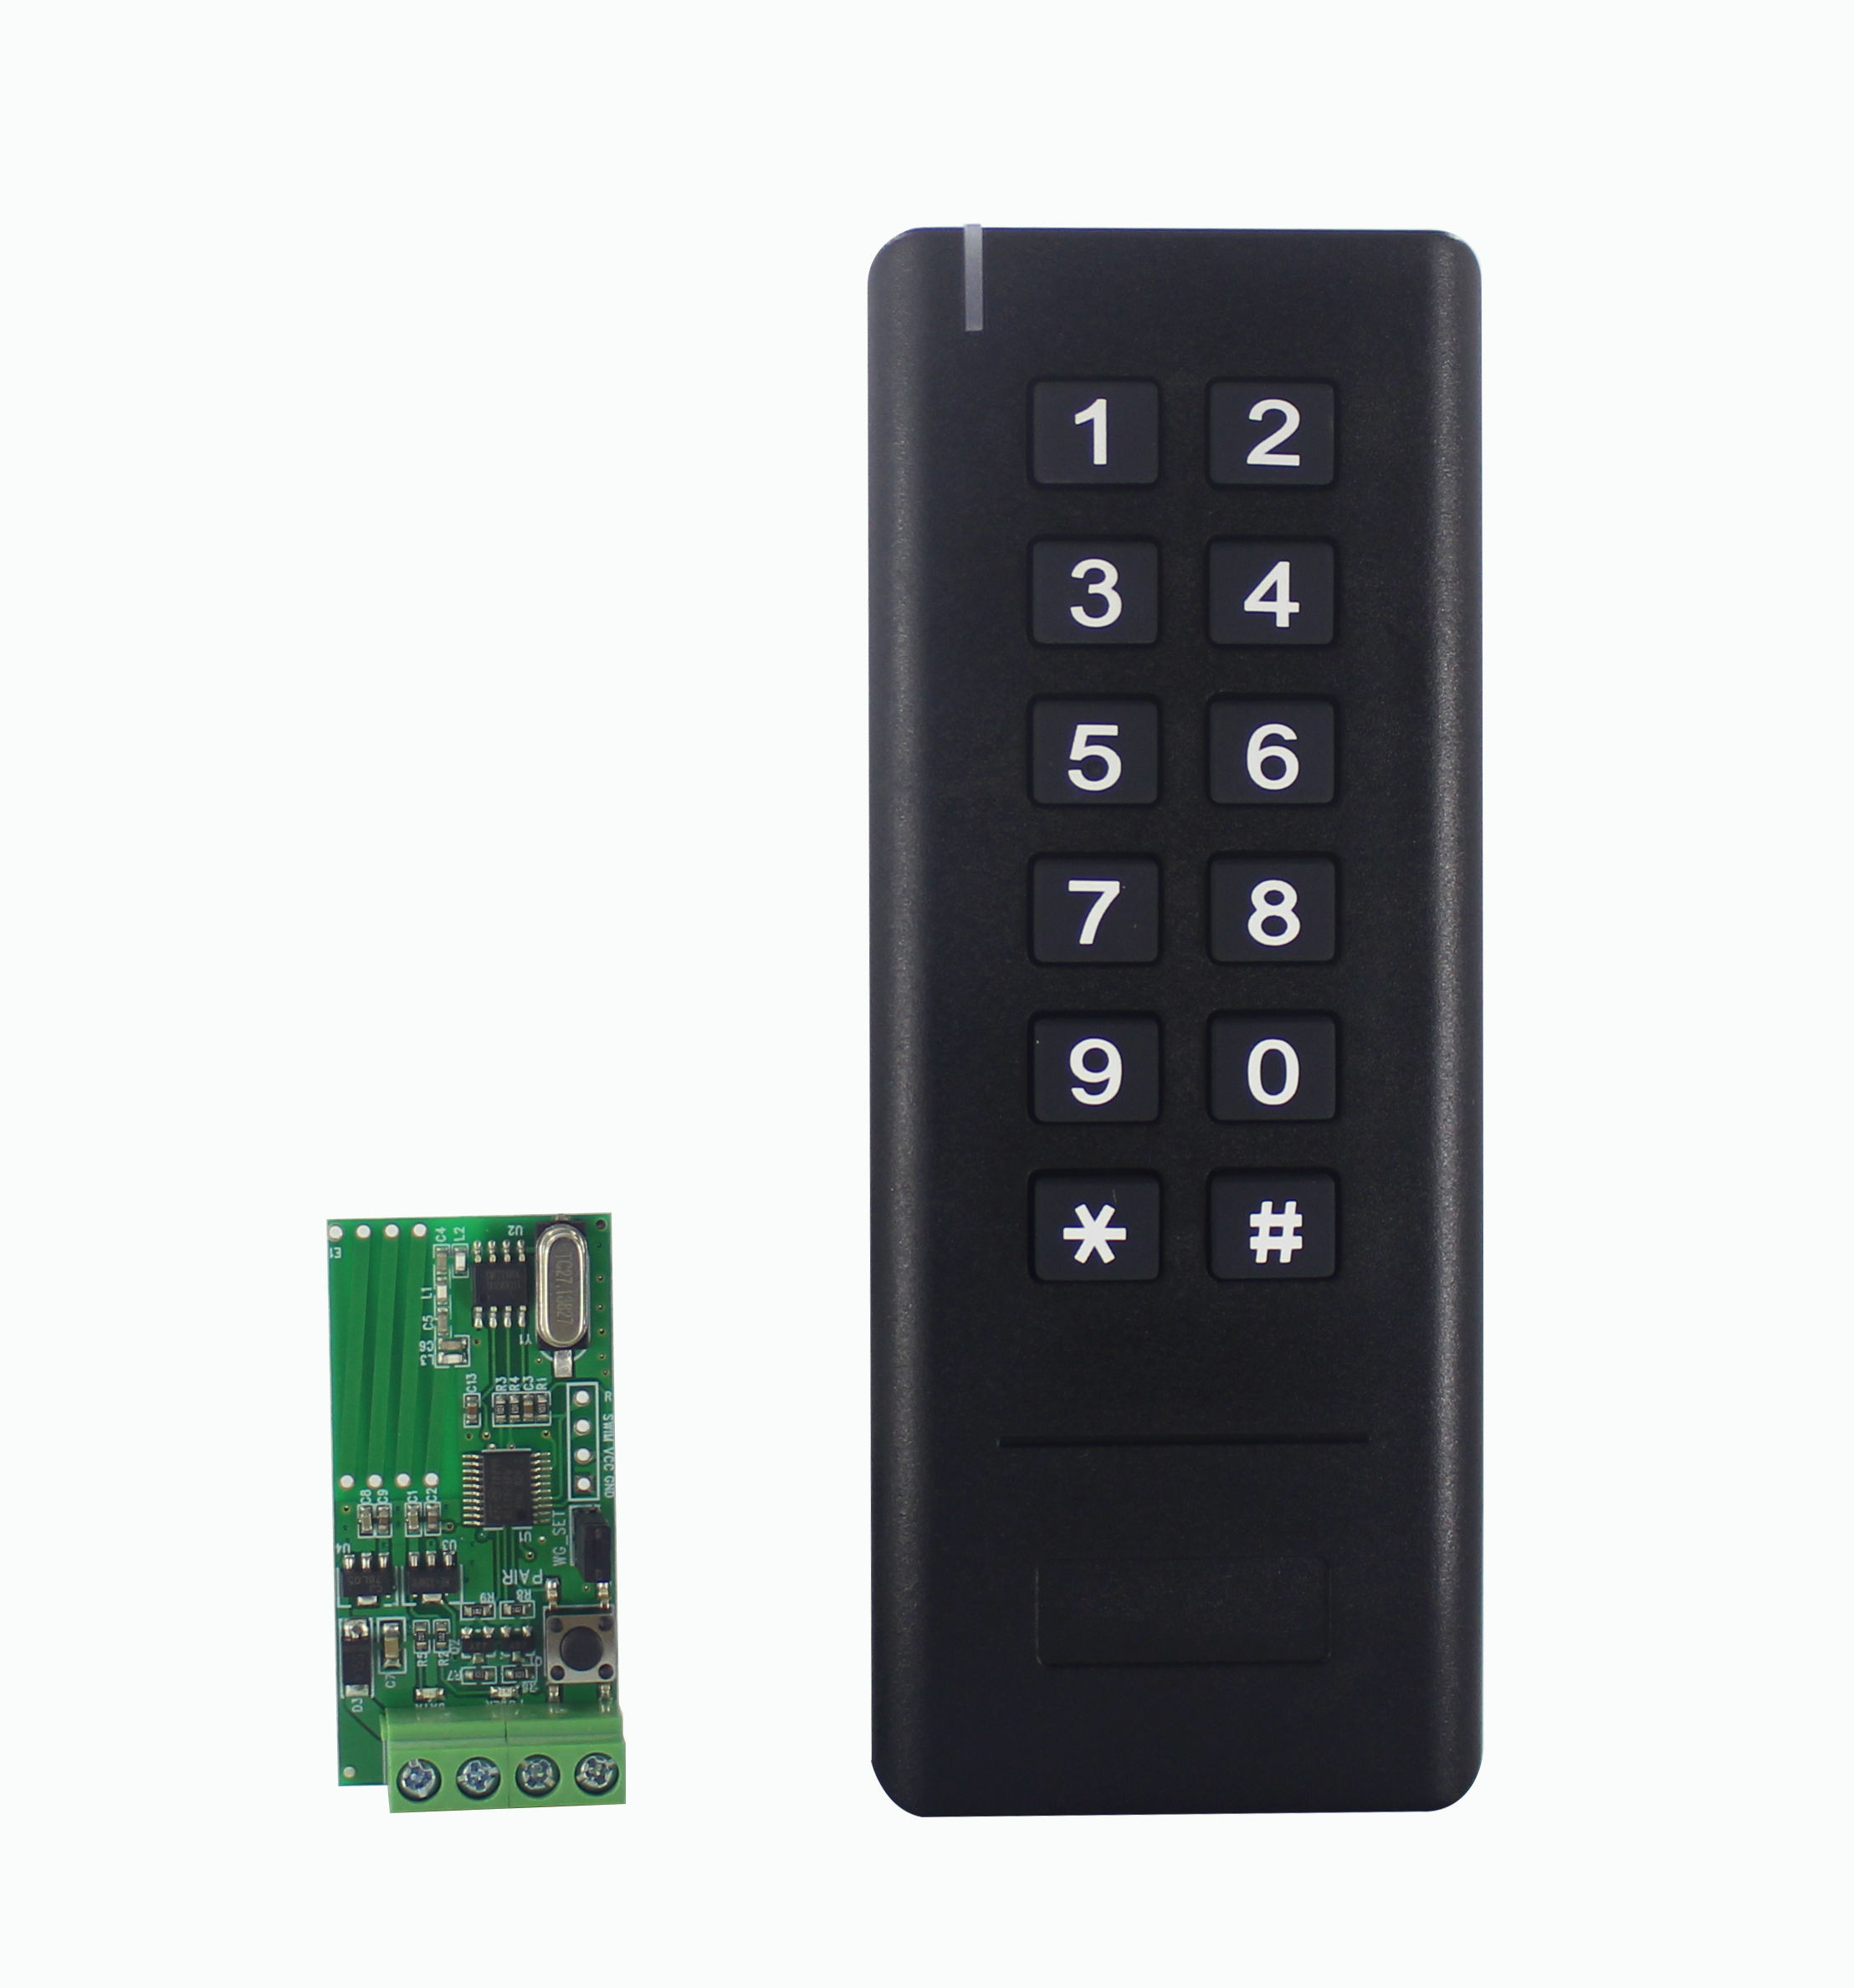 OCB-WK1-EM Wireless Keypad Reader